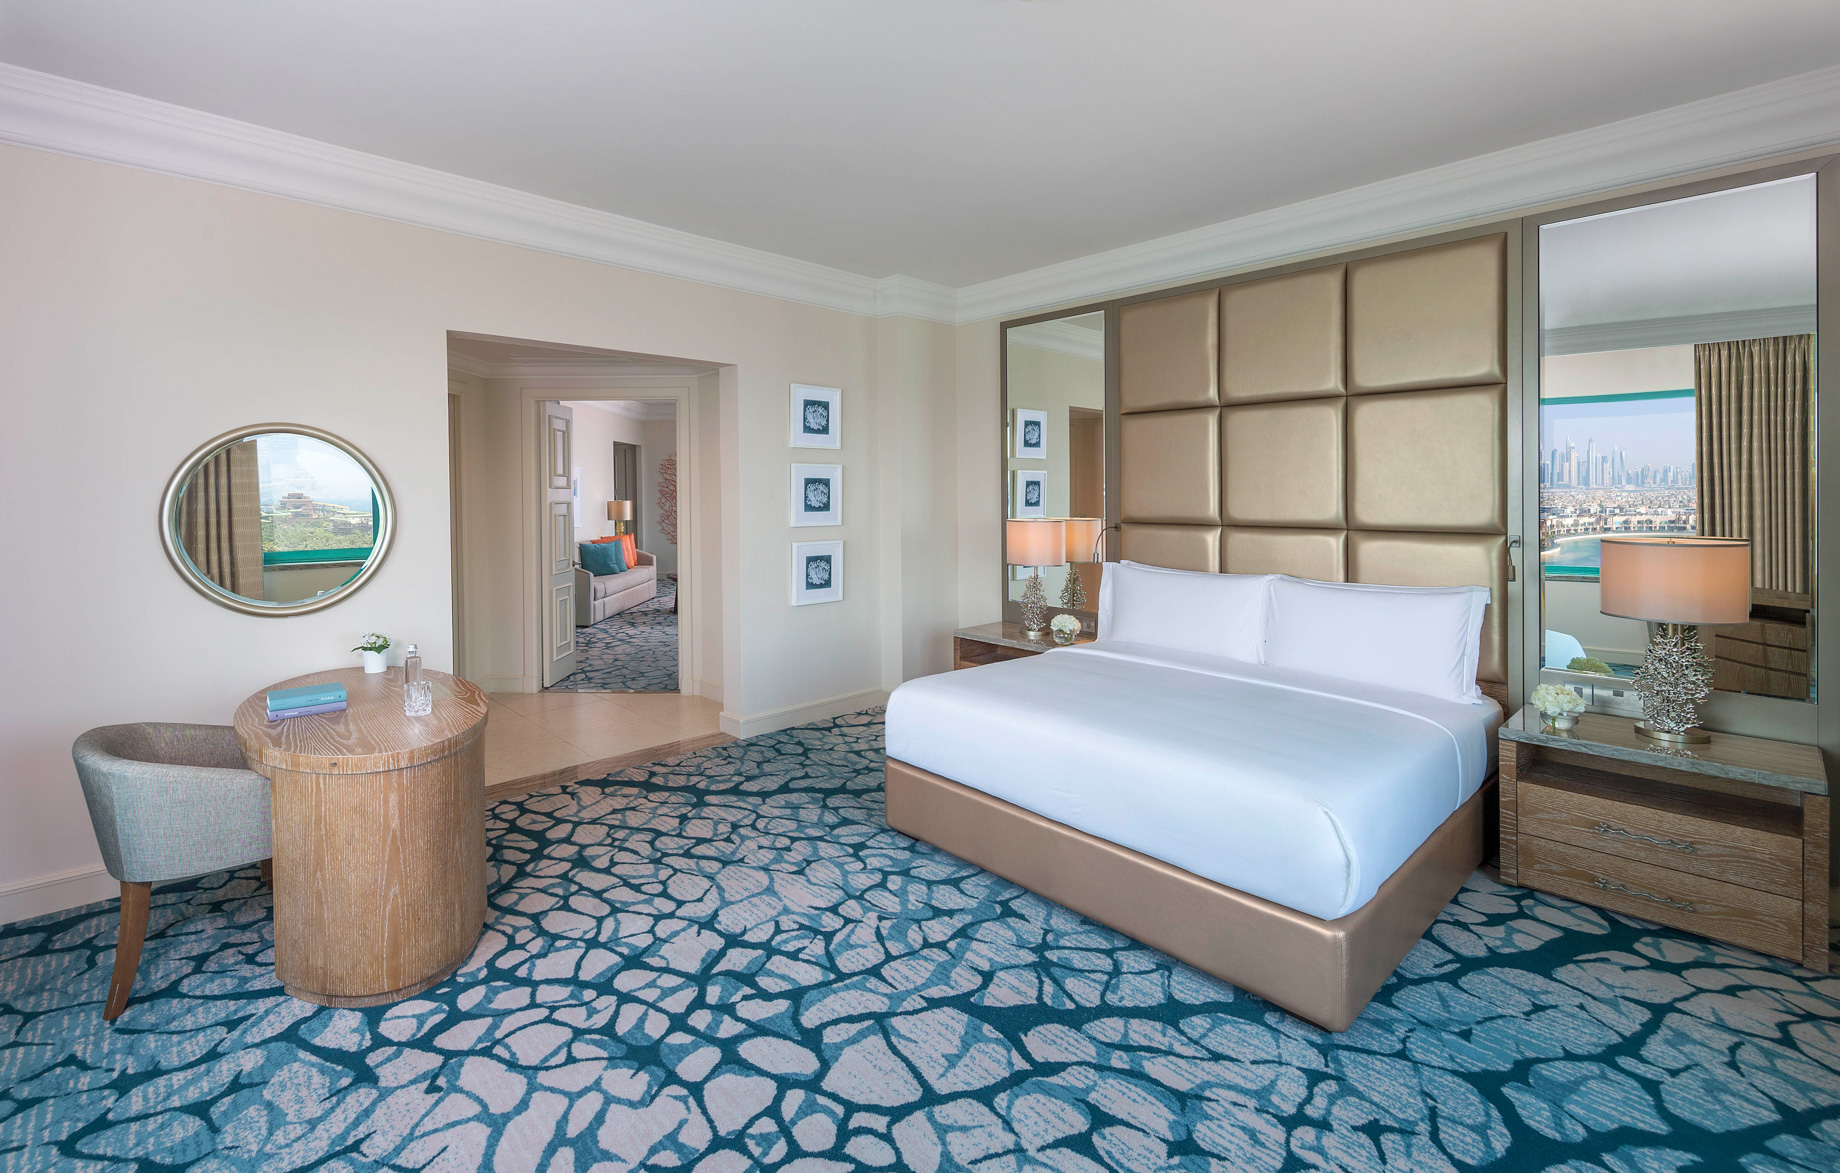 Atlantis The Palm Resort – Crescent Rd, Dubai, UAE – Executive Club Suite Bedroom